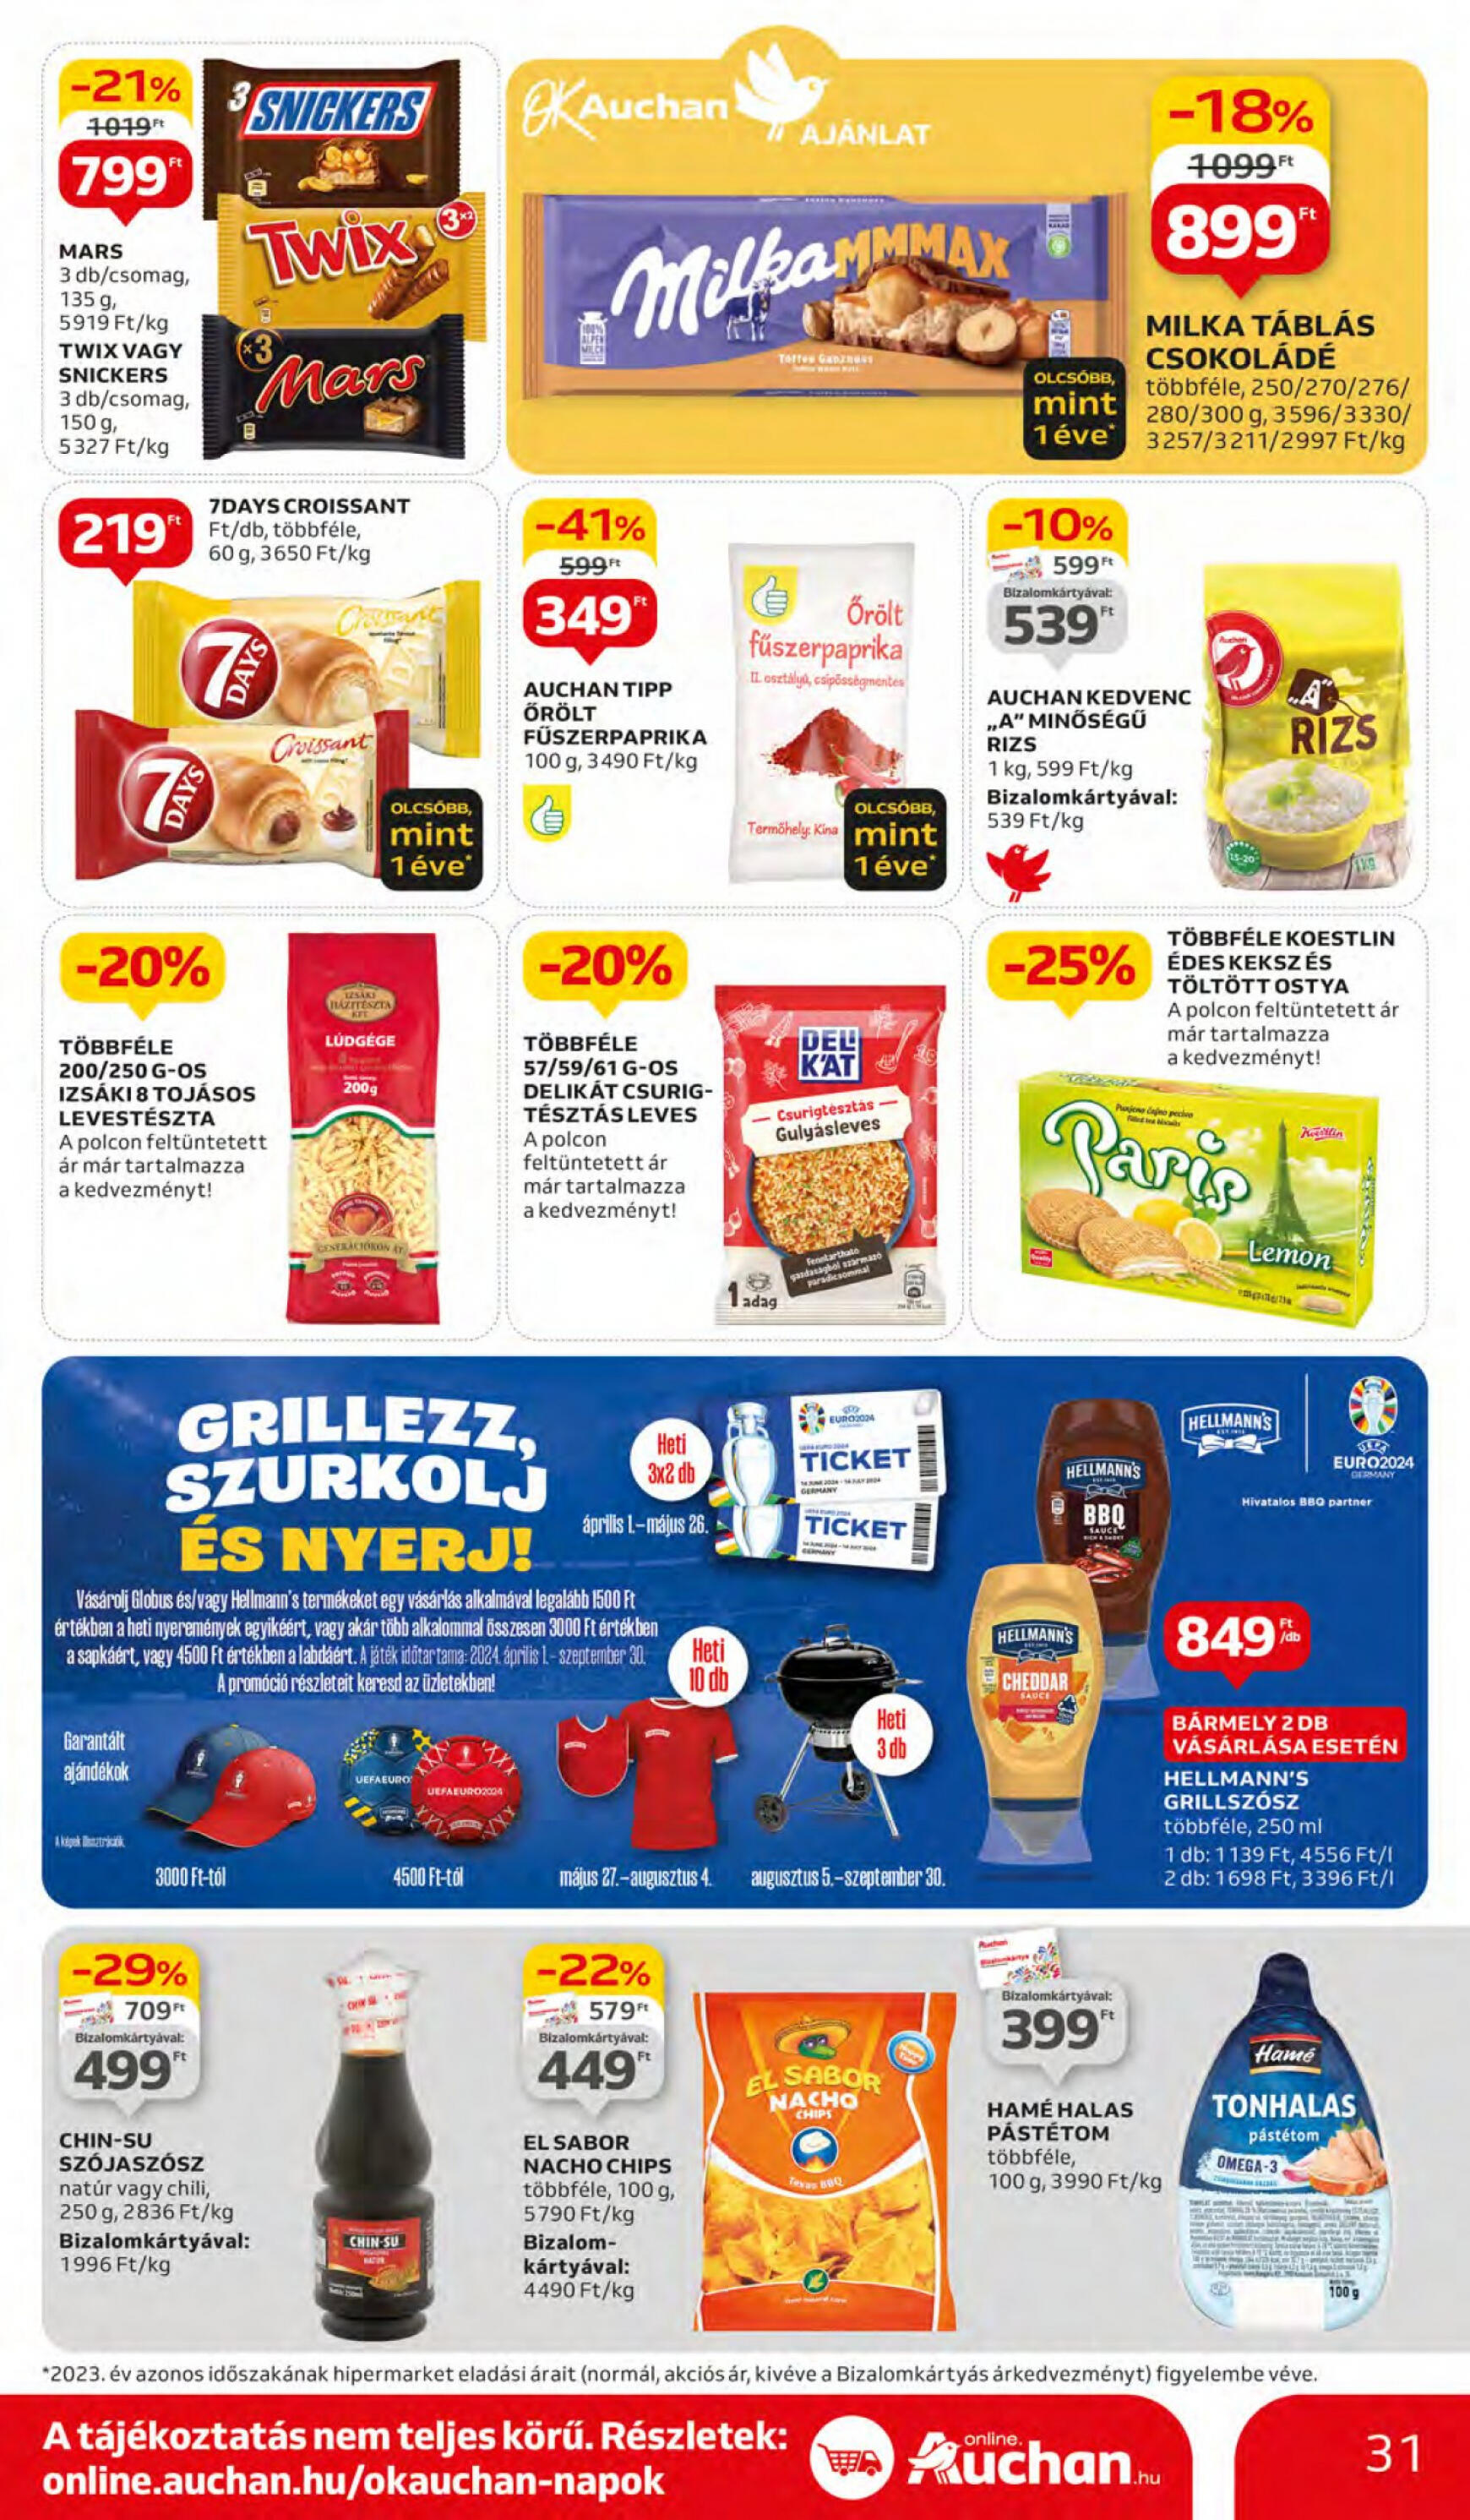 auchan - Aktuális újság Auchan 04.11. - 04.17. - page: 31